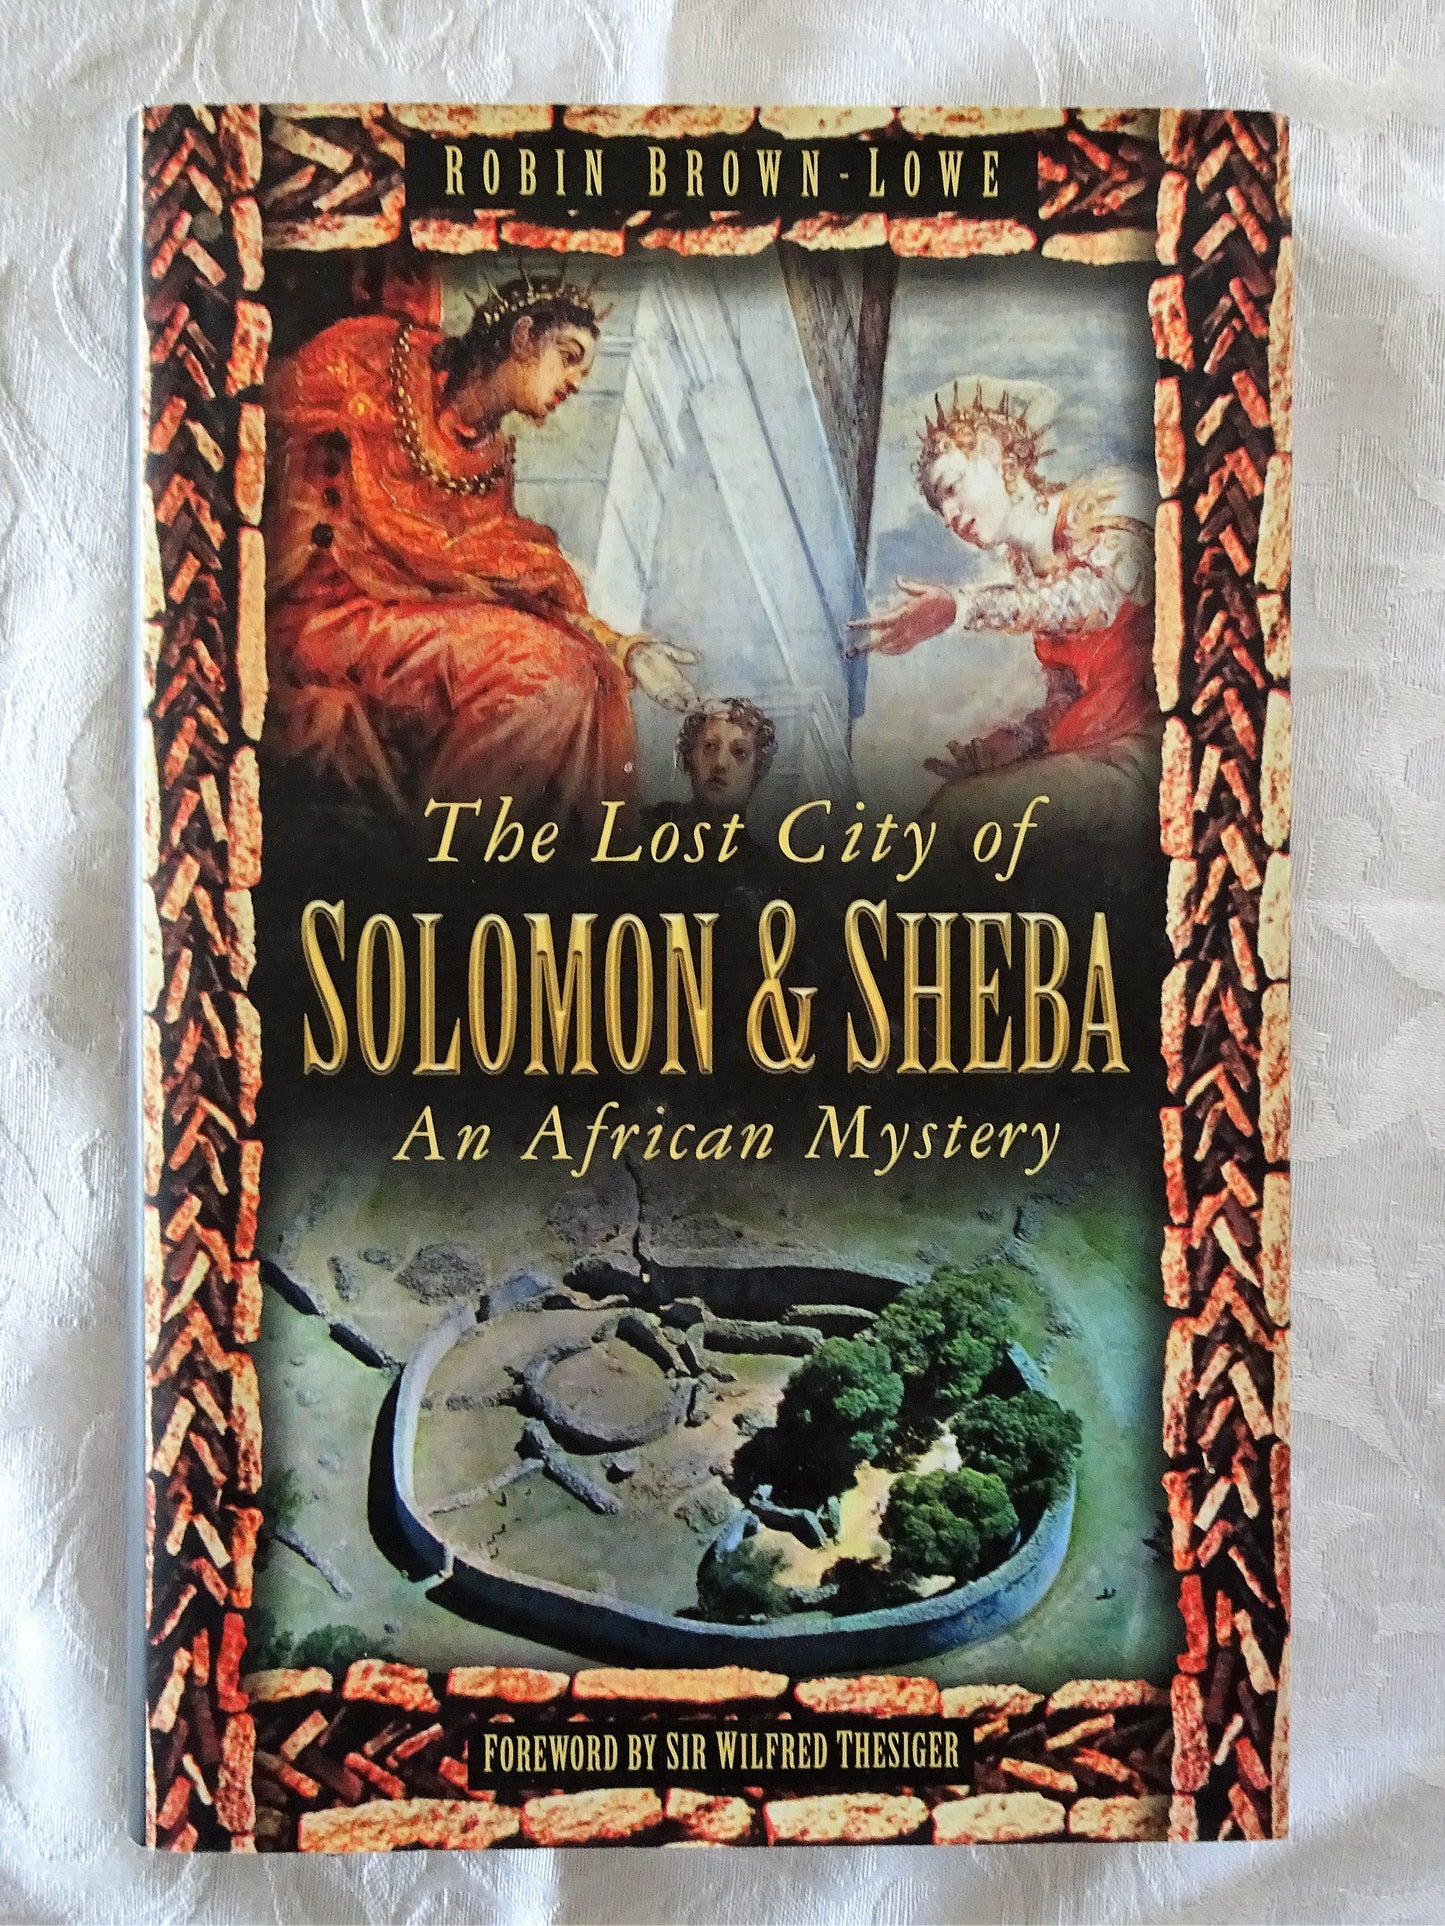 The Lost City of Solomon & Sheba by Robin Brown-Lowe